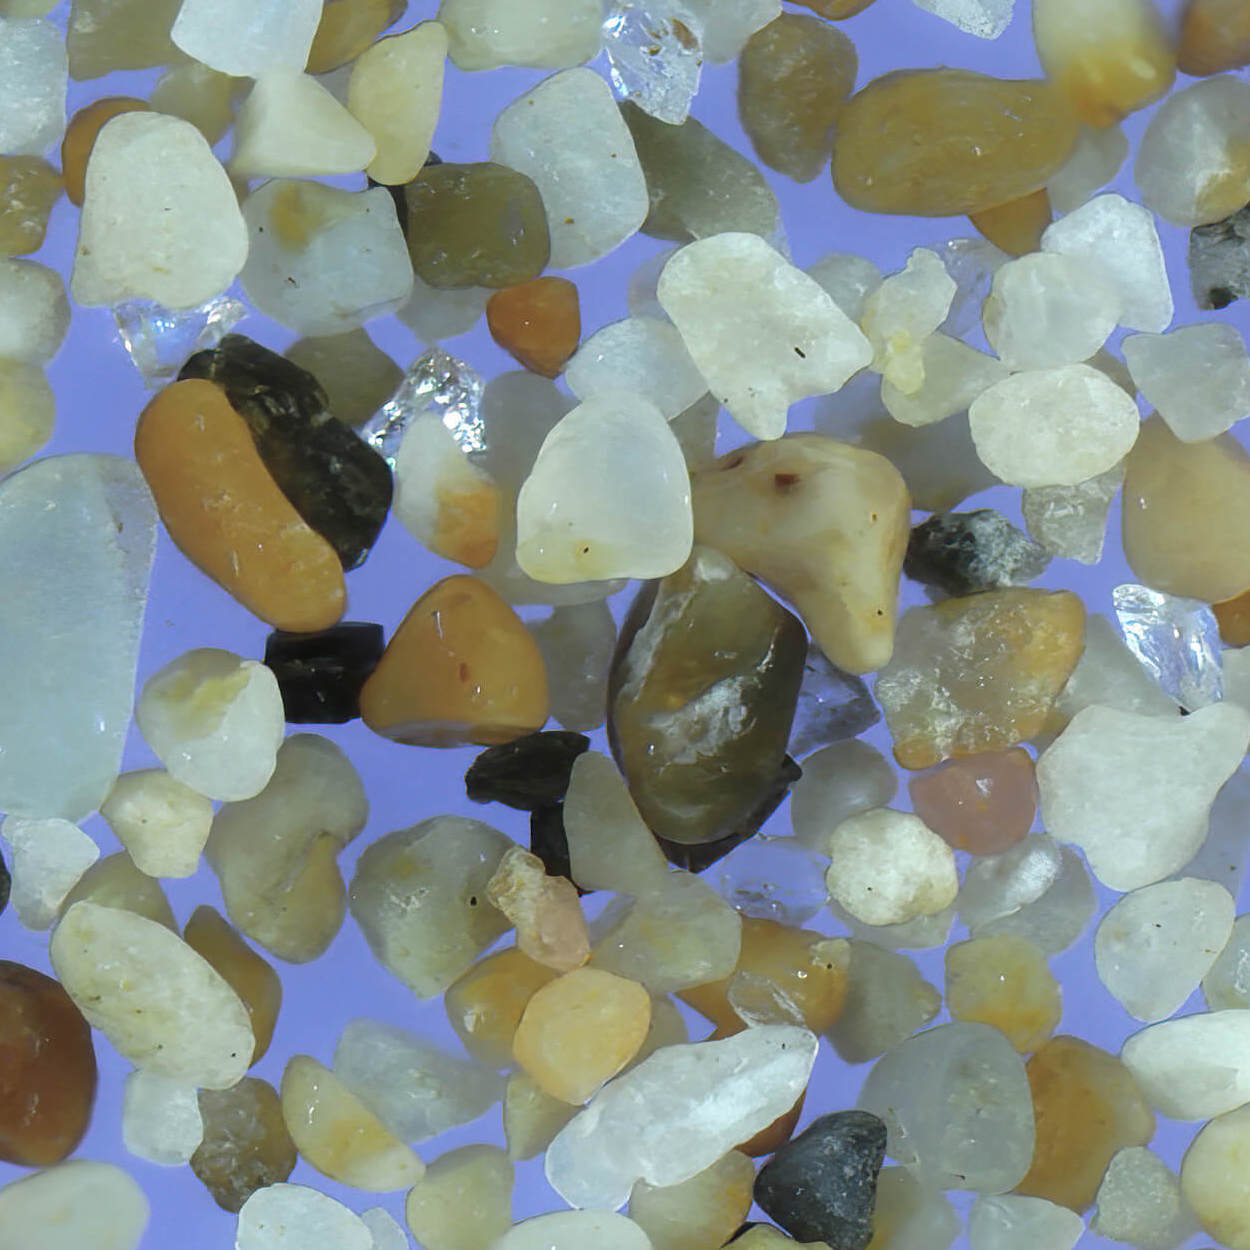 Sq2 Qurum Beach Muscat Oman Sand Grains Magnified Under Microscope 3